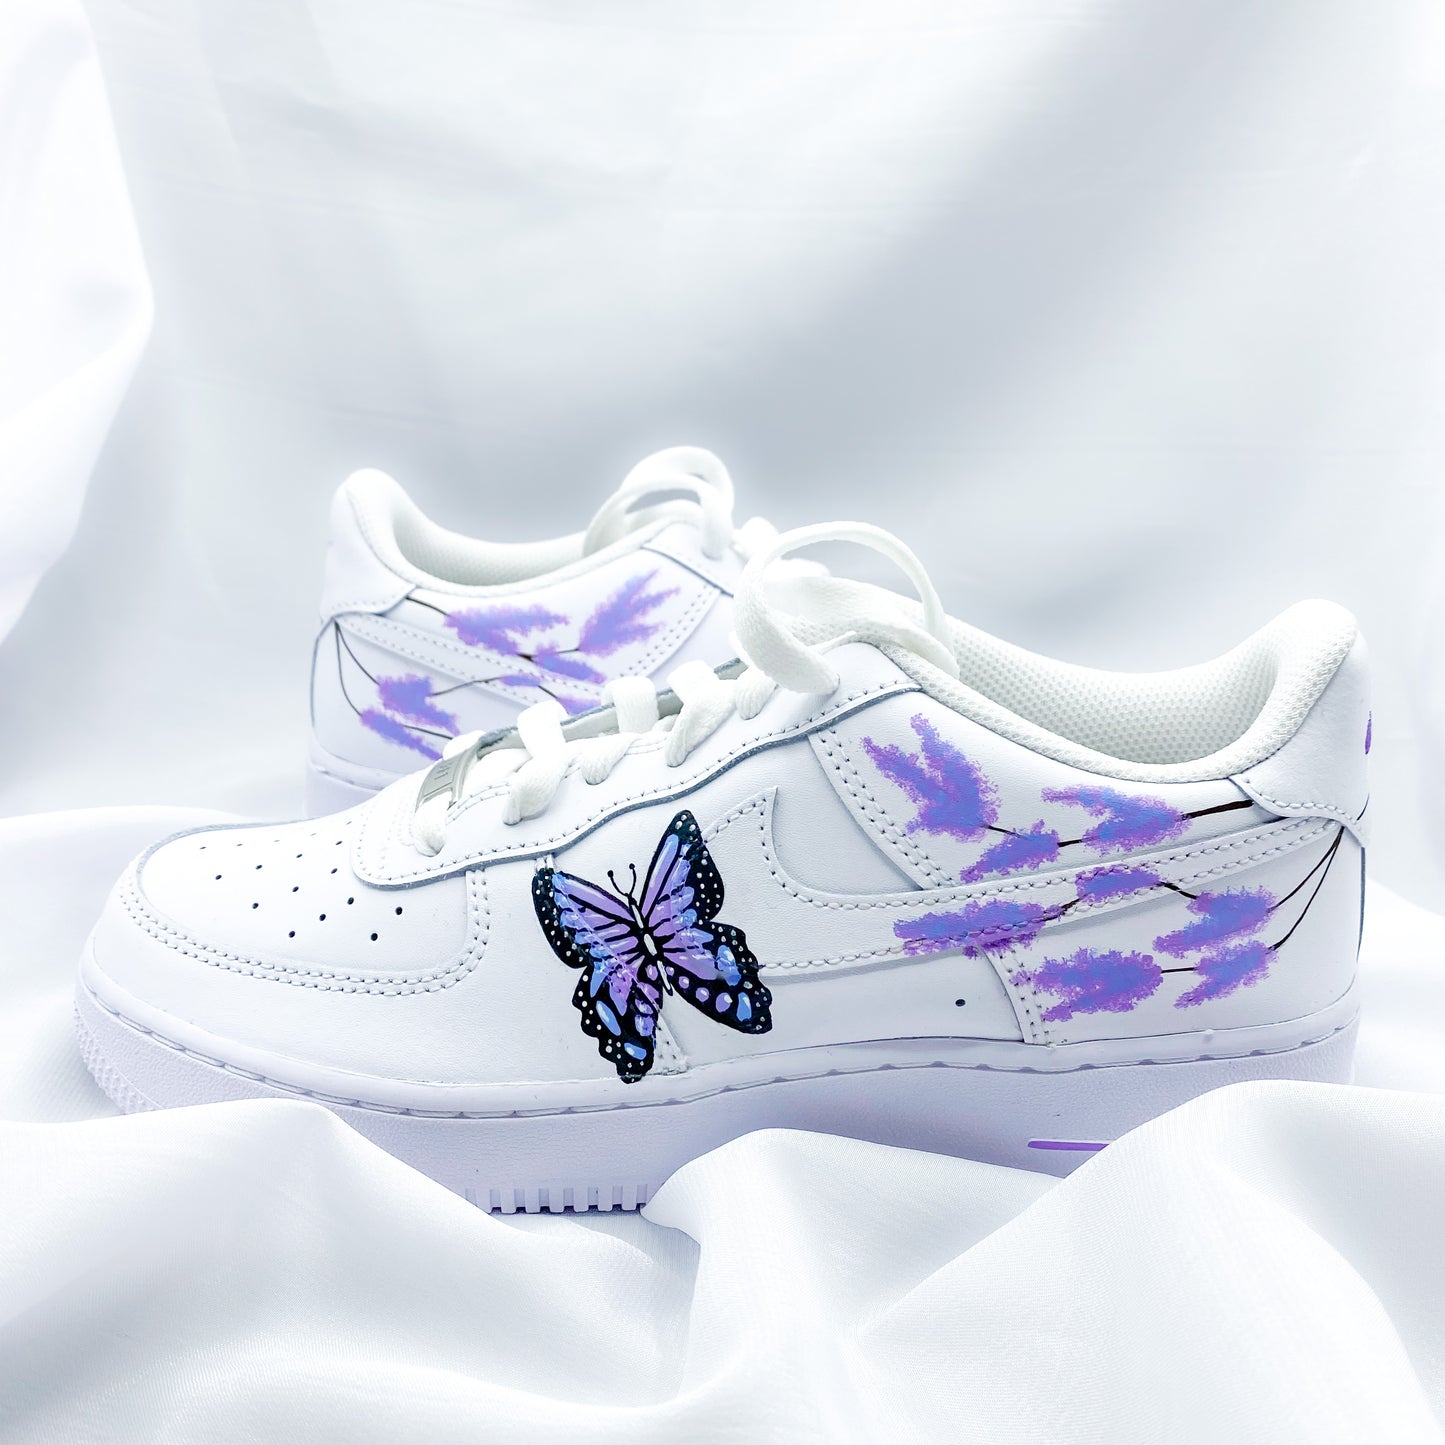 Custom Nike Air Force 1 Schmetterling